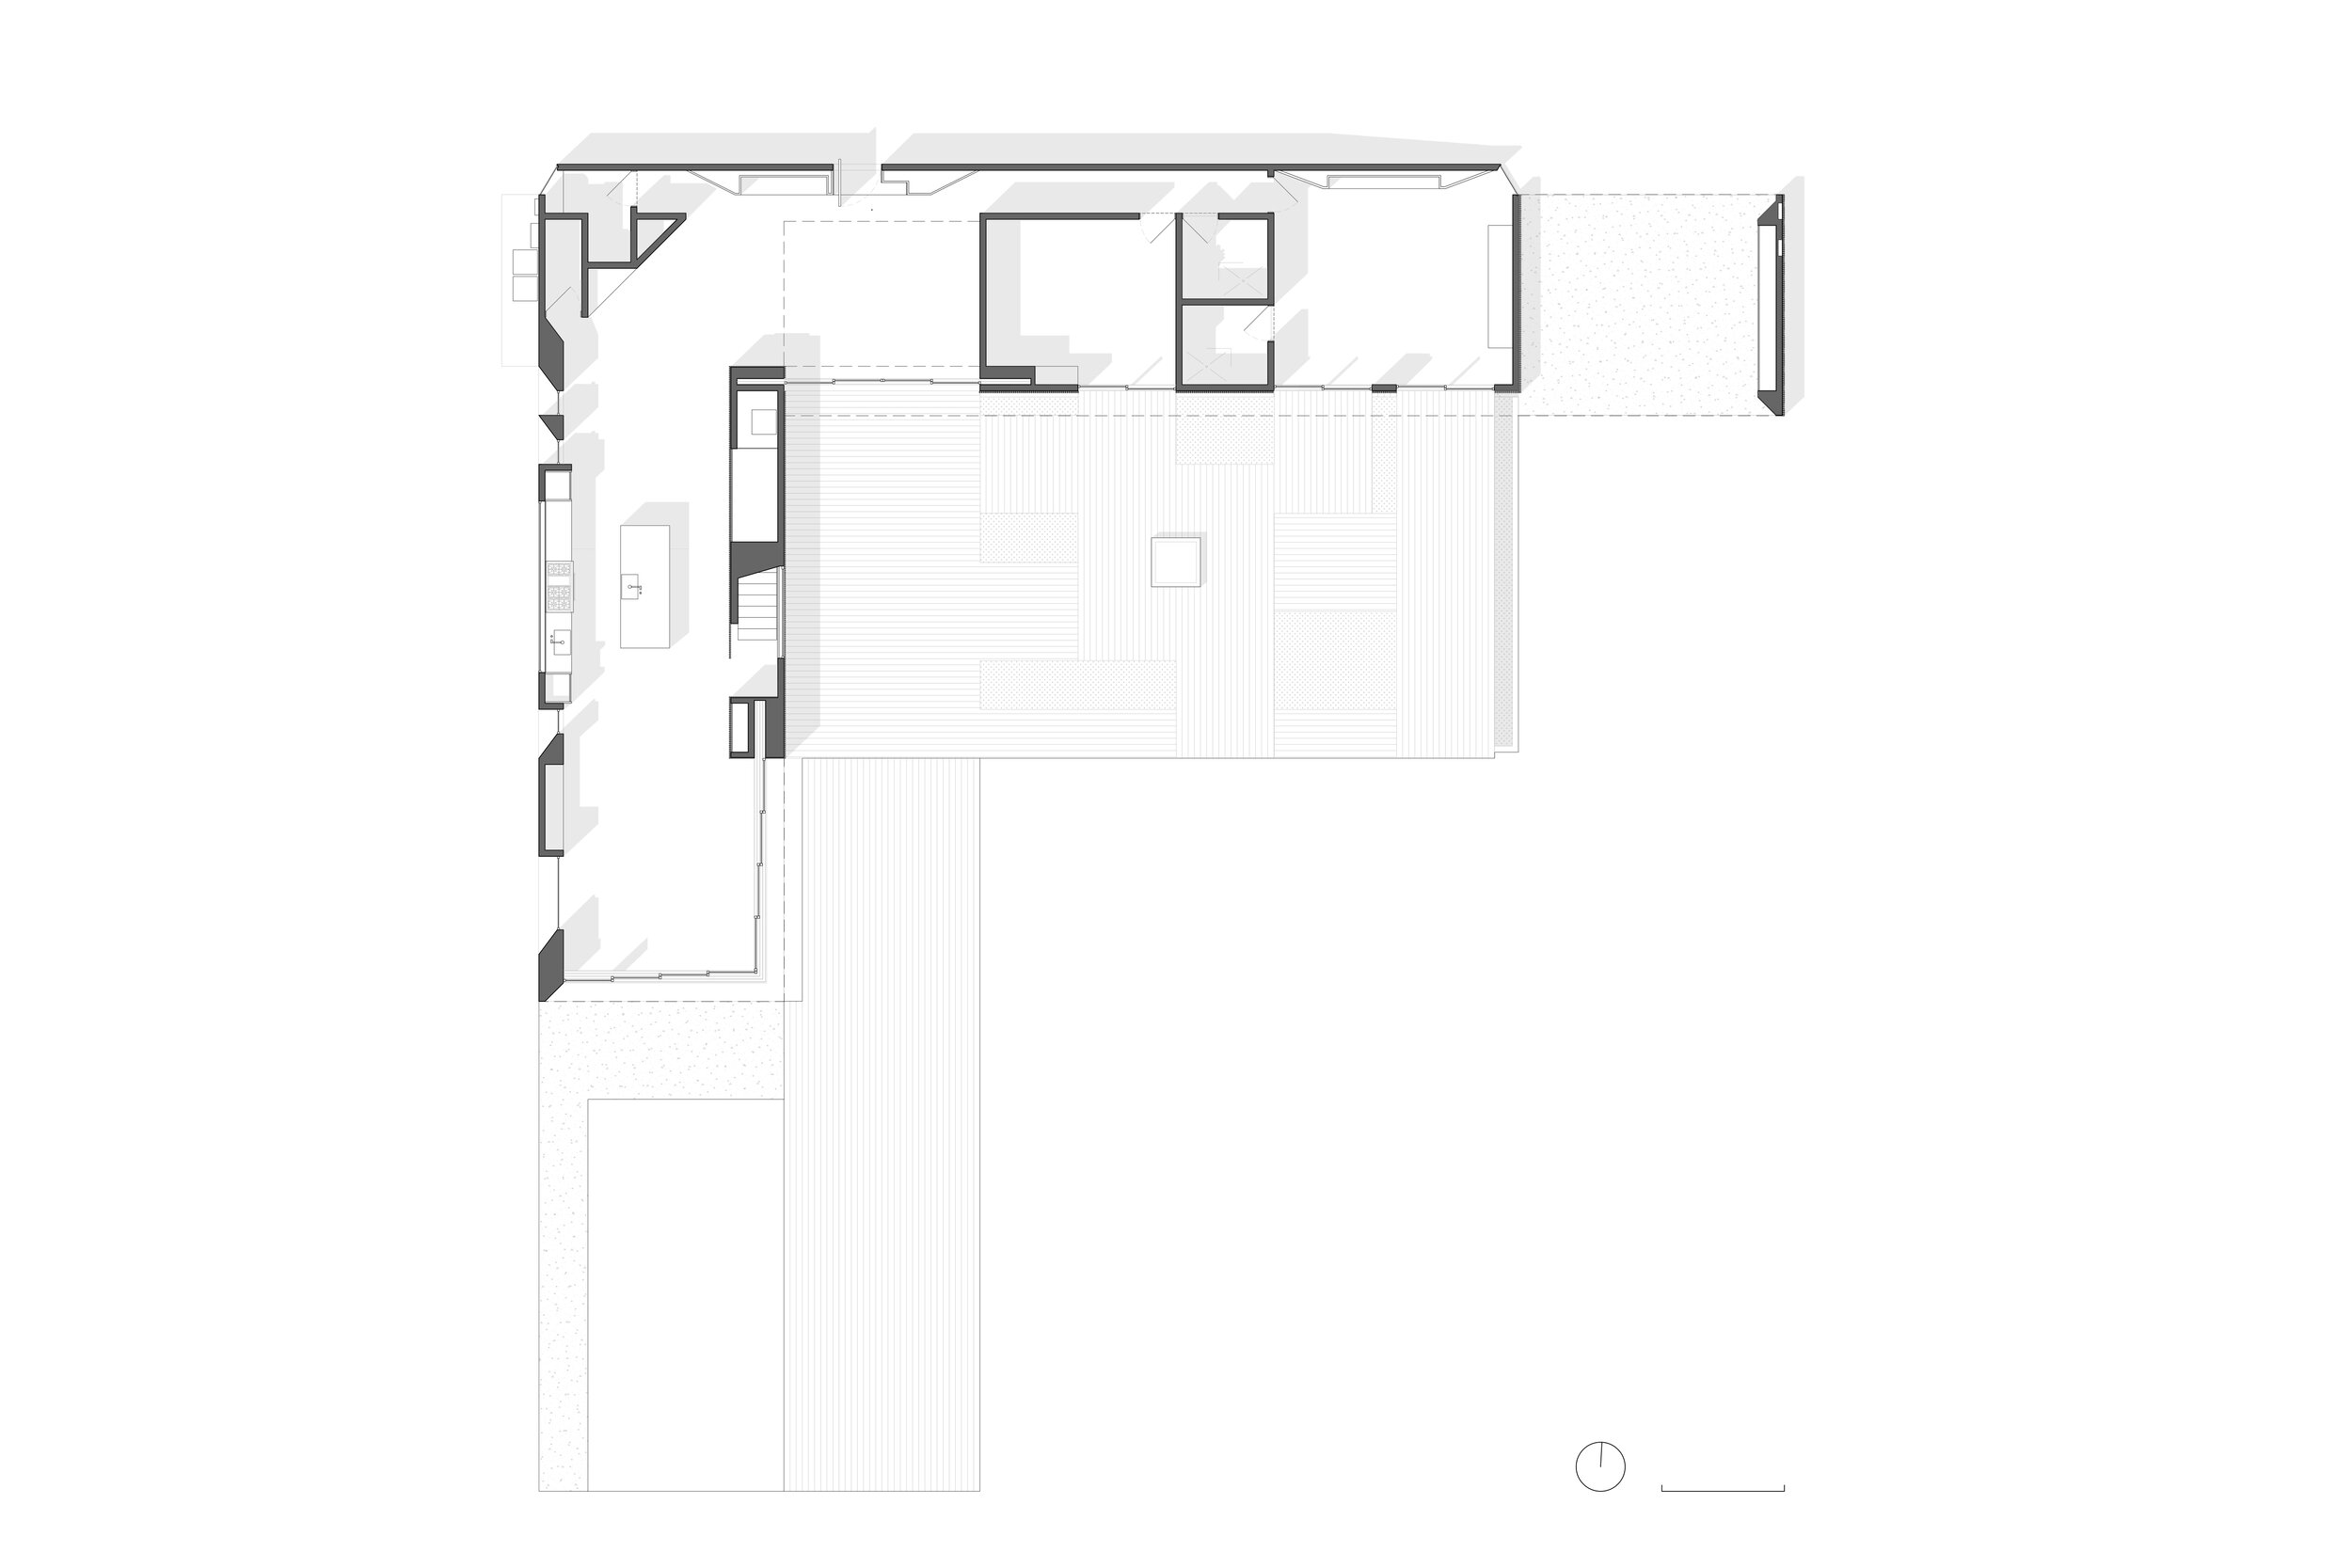 BD_Publication - First Floor Plan.jpg